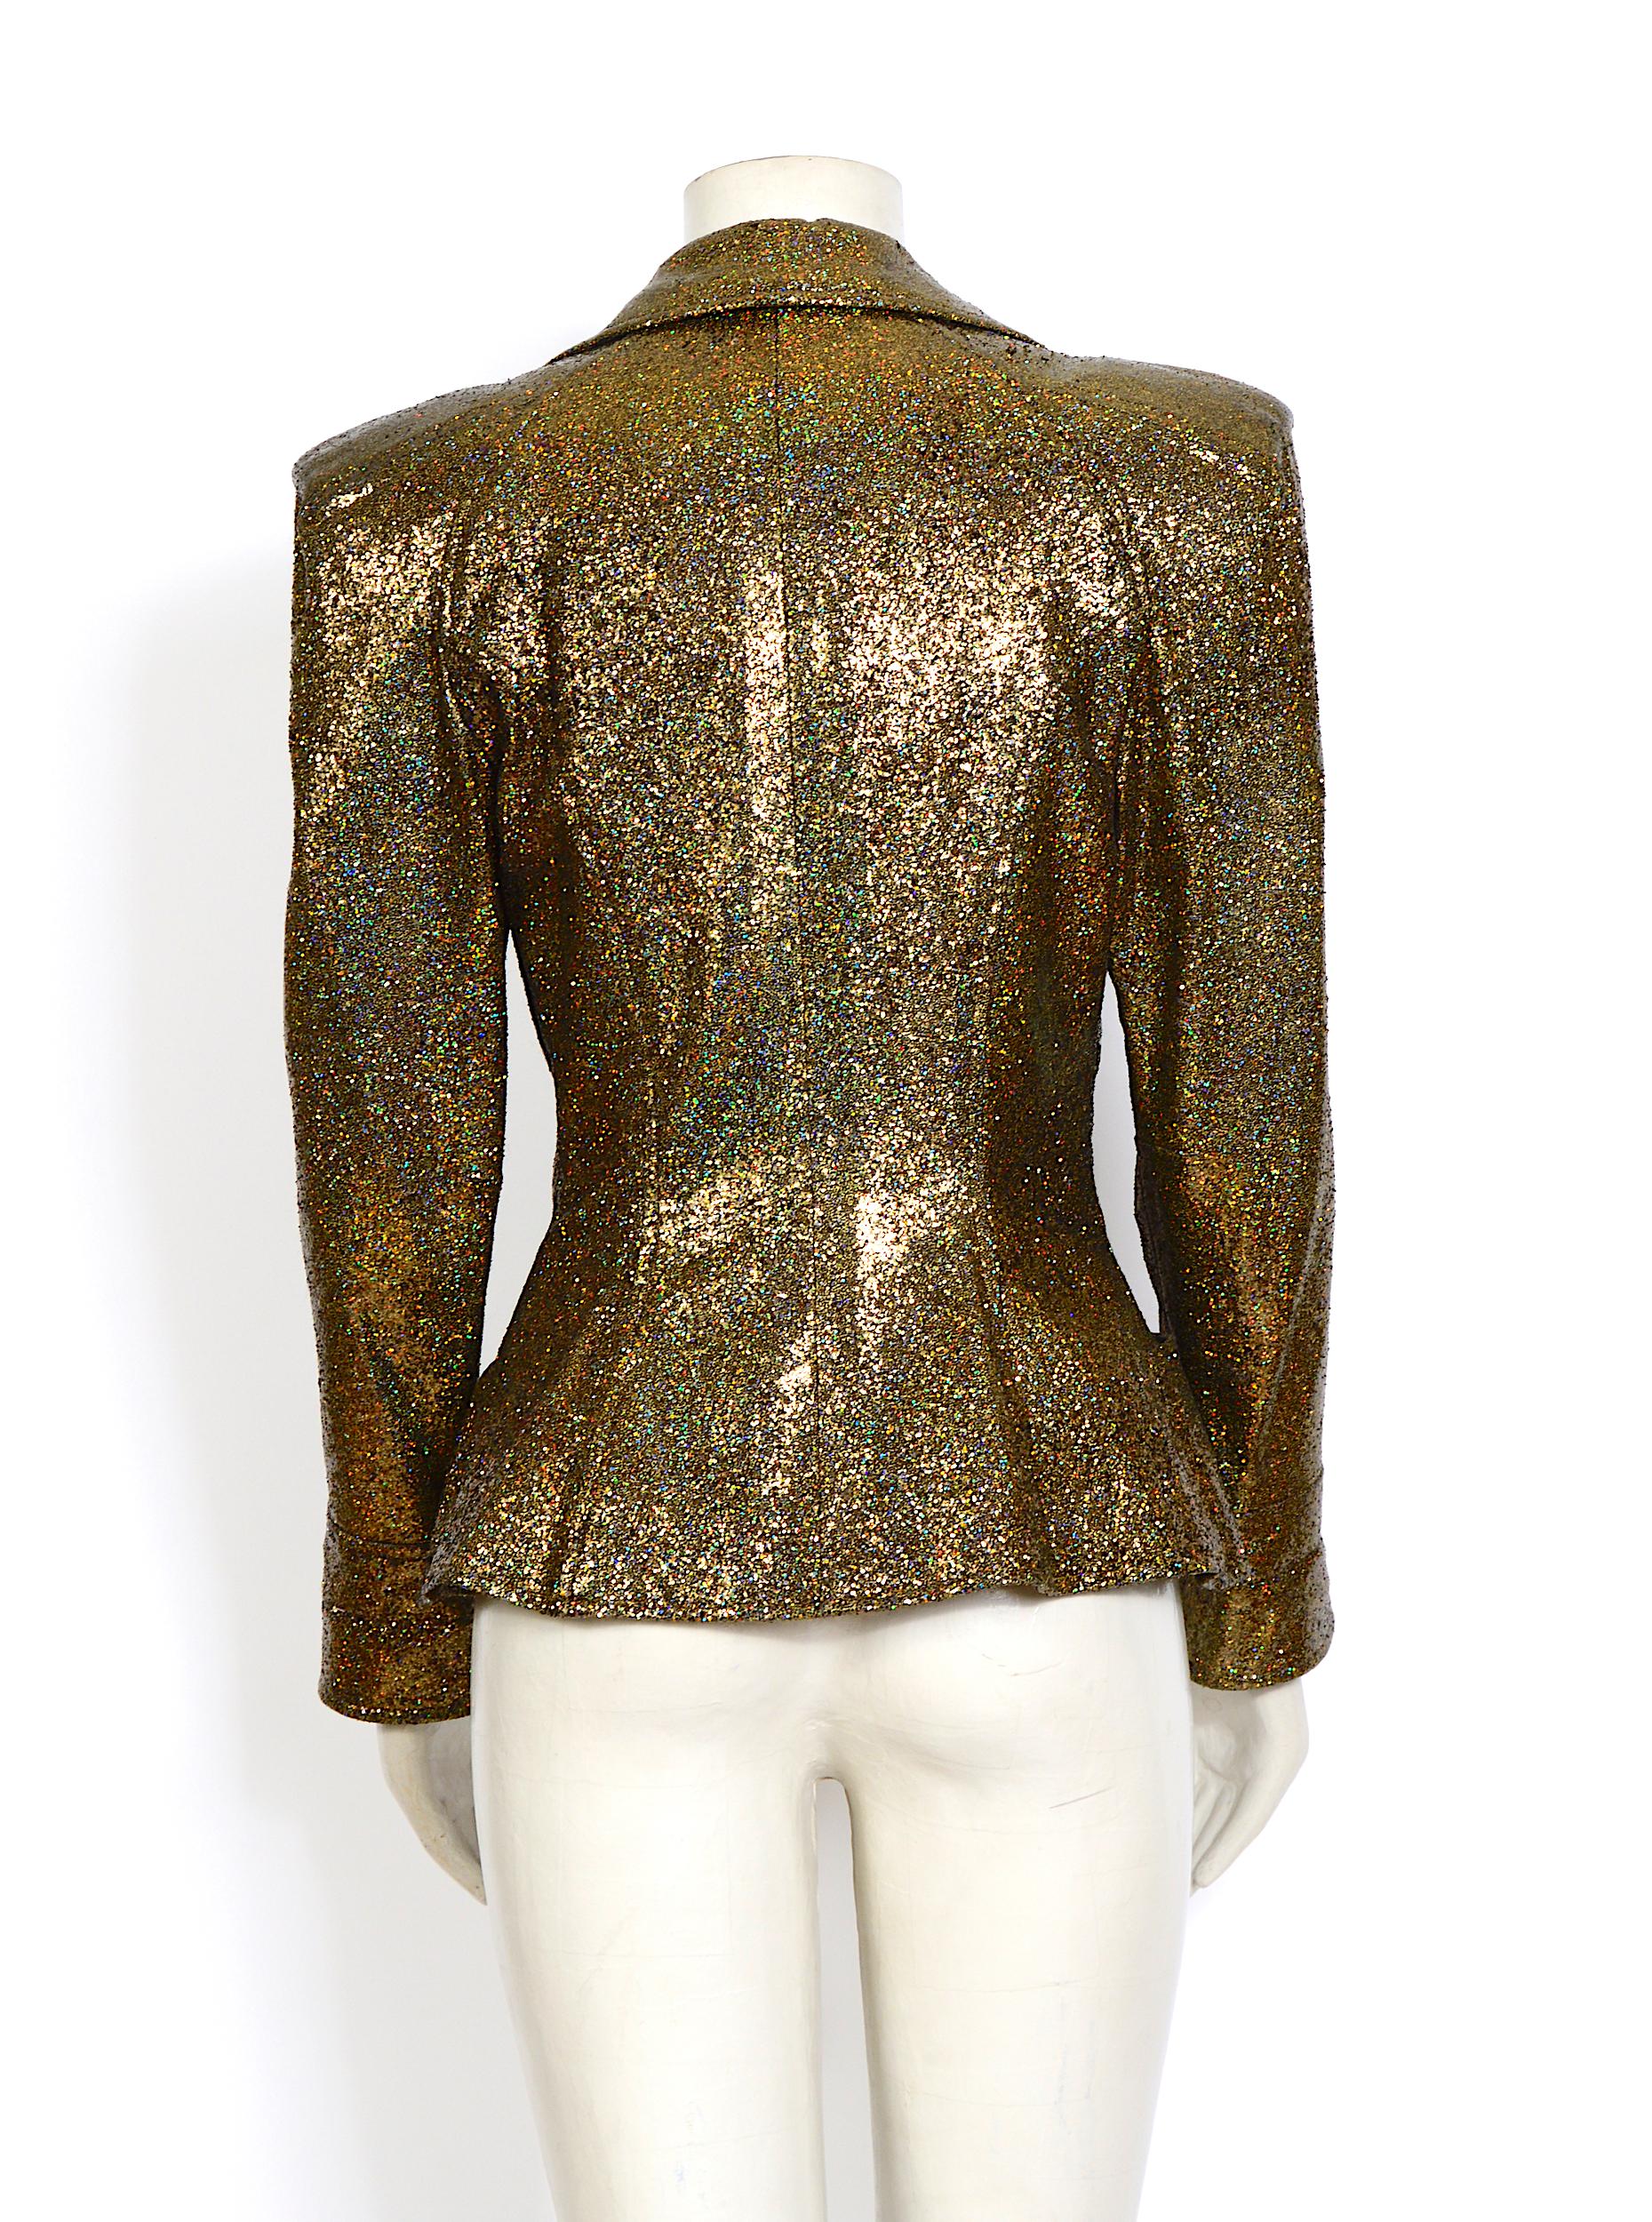 Christian Lacroix vintage runway spring summer 1995 gold sparkly jacket For Sale 2